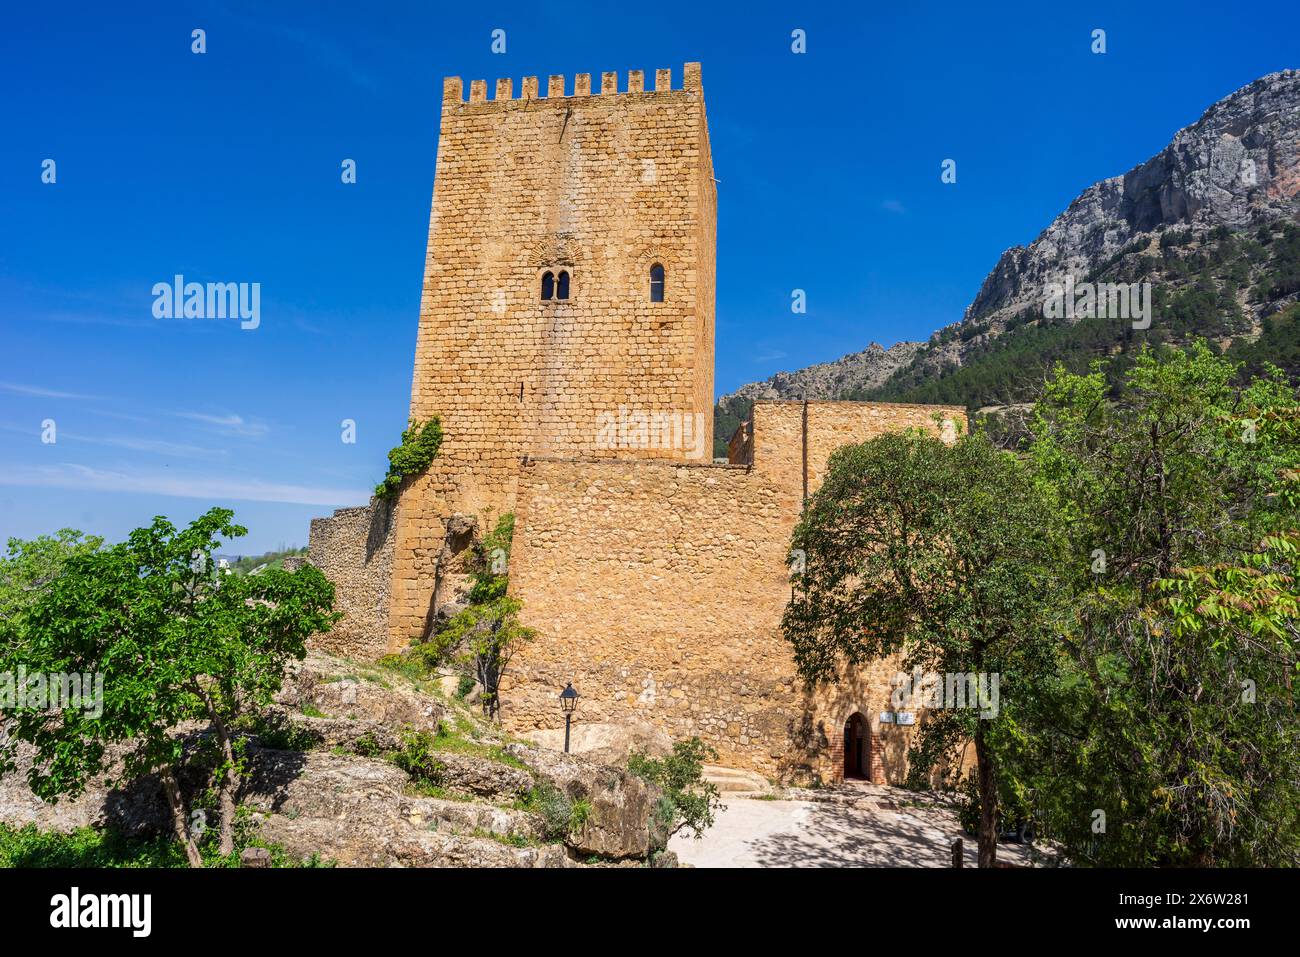 Castillo de la Yedra - castle of the Four Corners- Cazorla town, Natural Park of the Sierras de Cazorla, Segura and Las Villas, Jaén province, Andalusia, Spain. Stock Photo